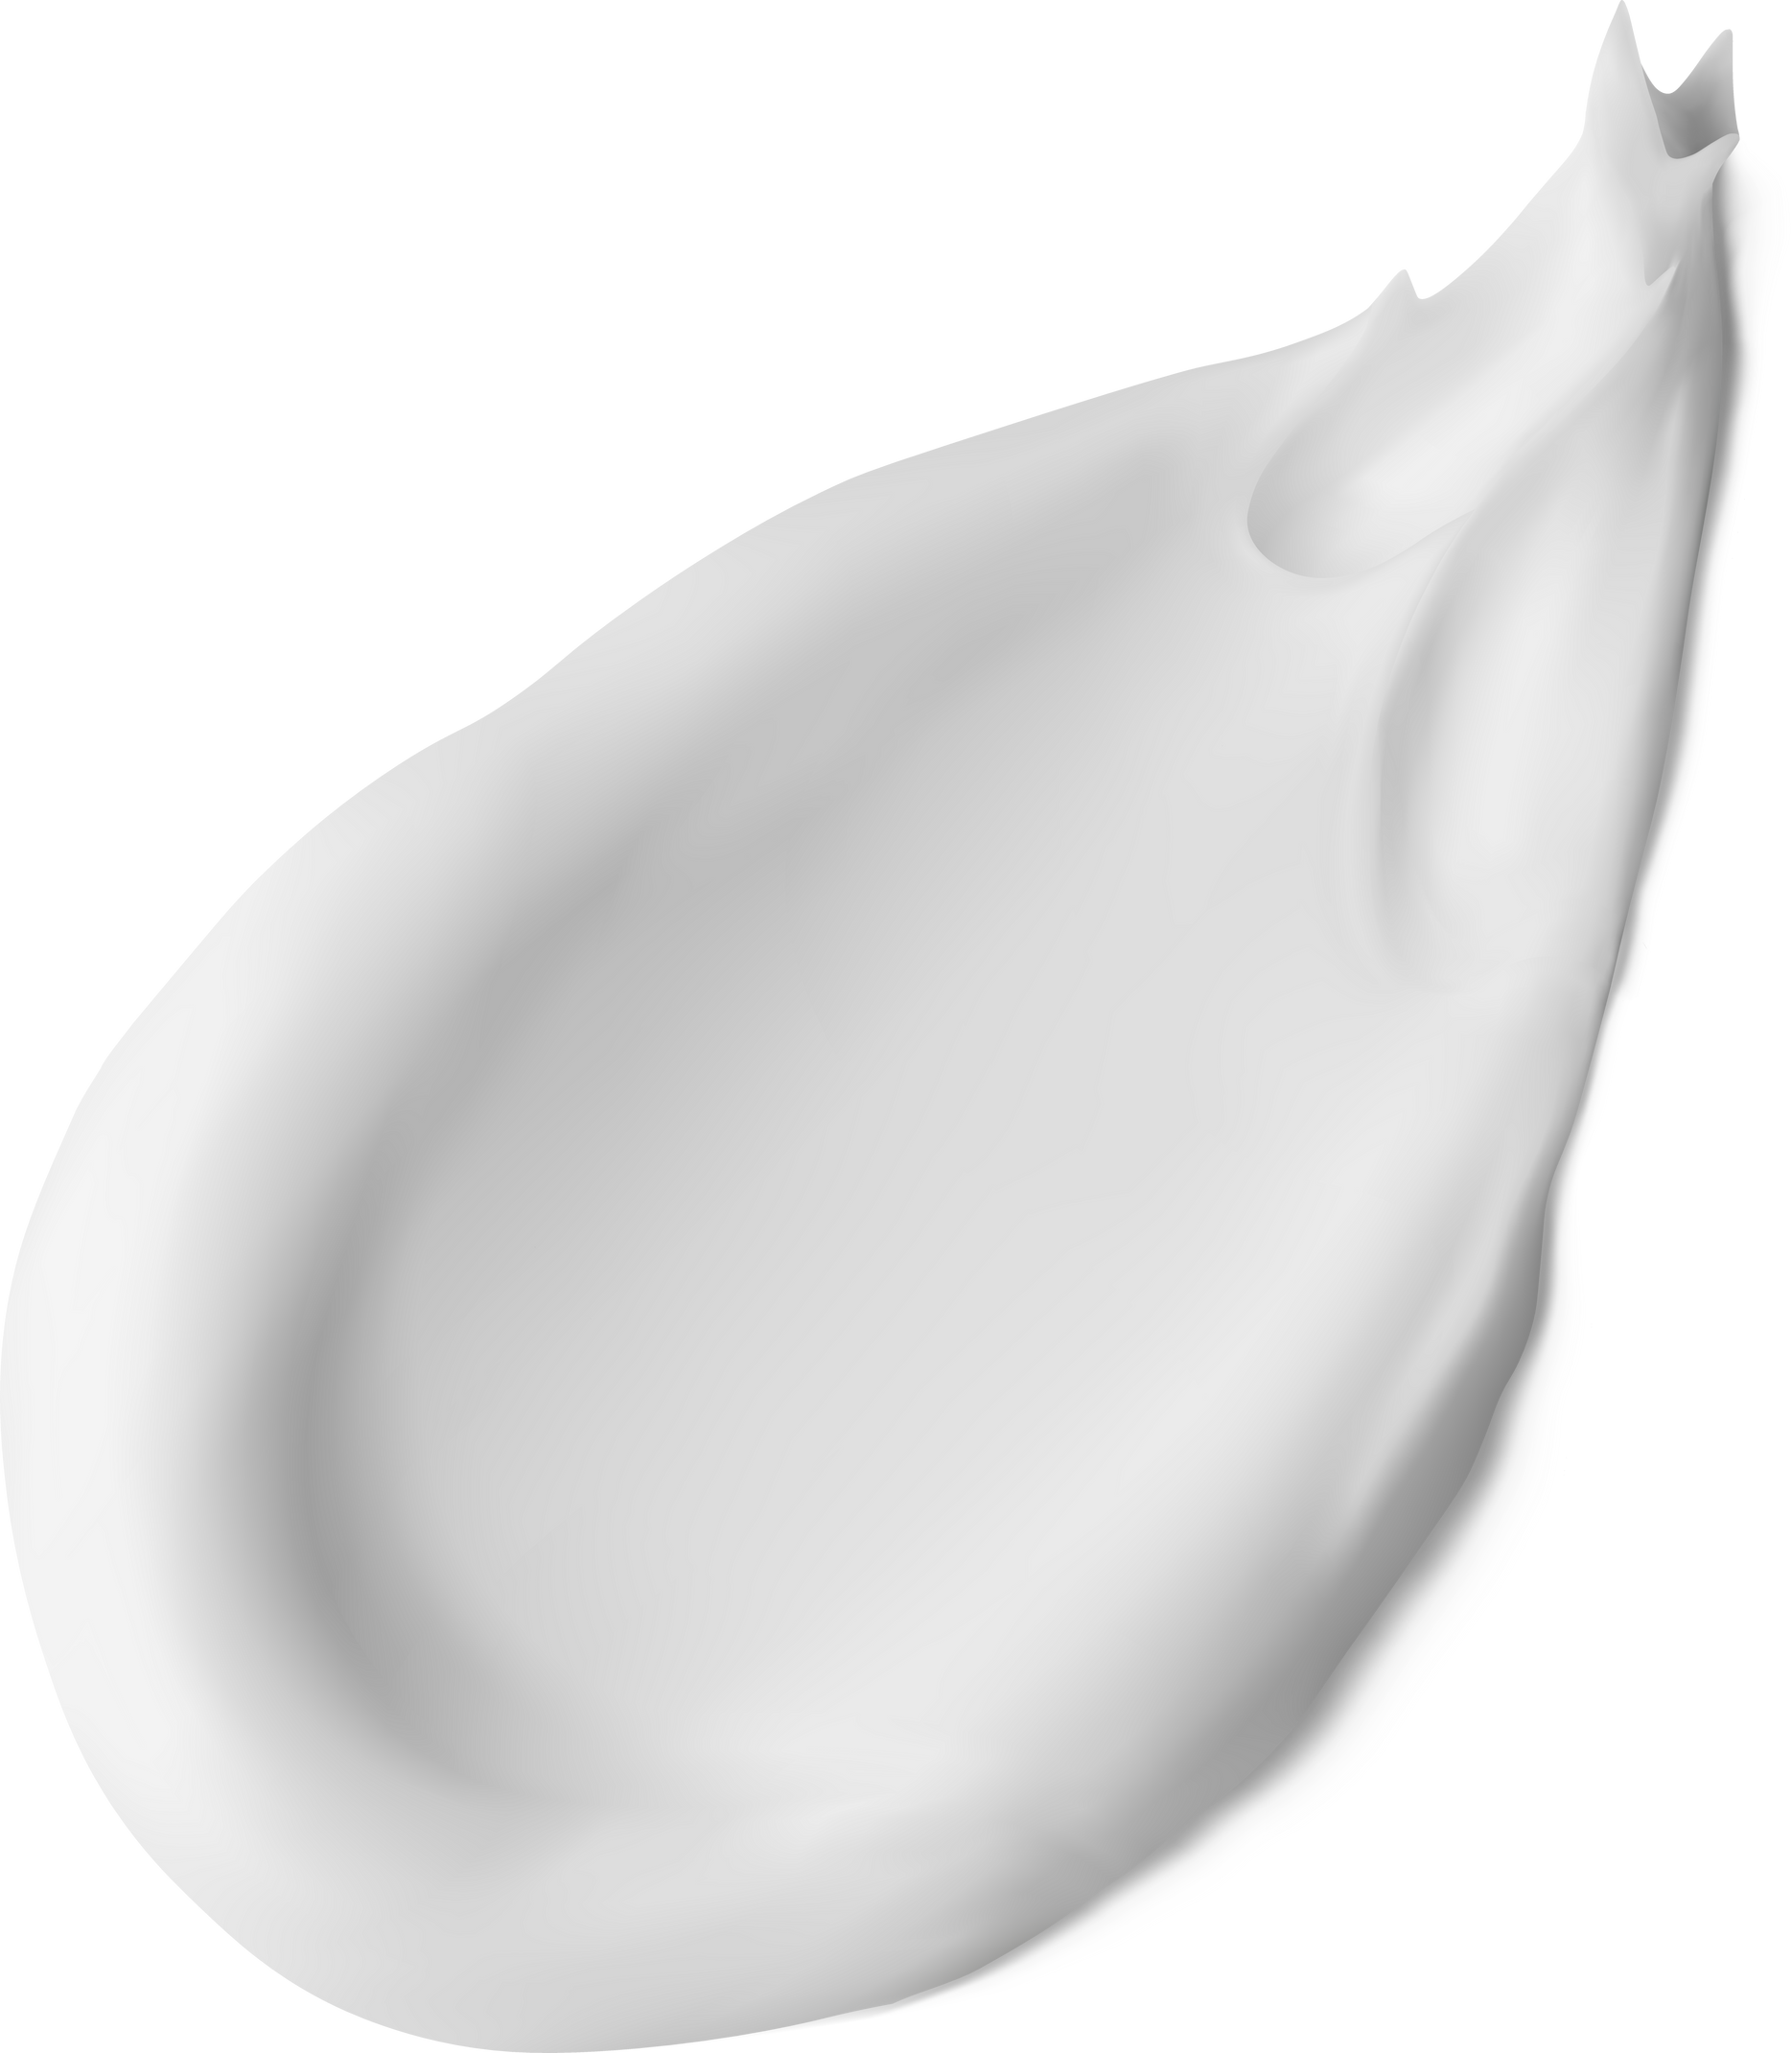 White cream smear realistic isolated